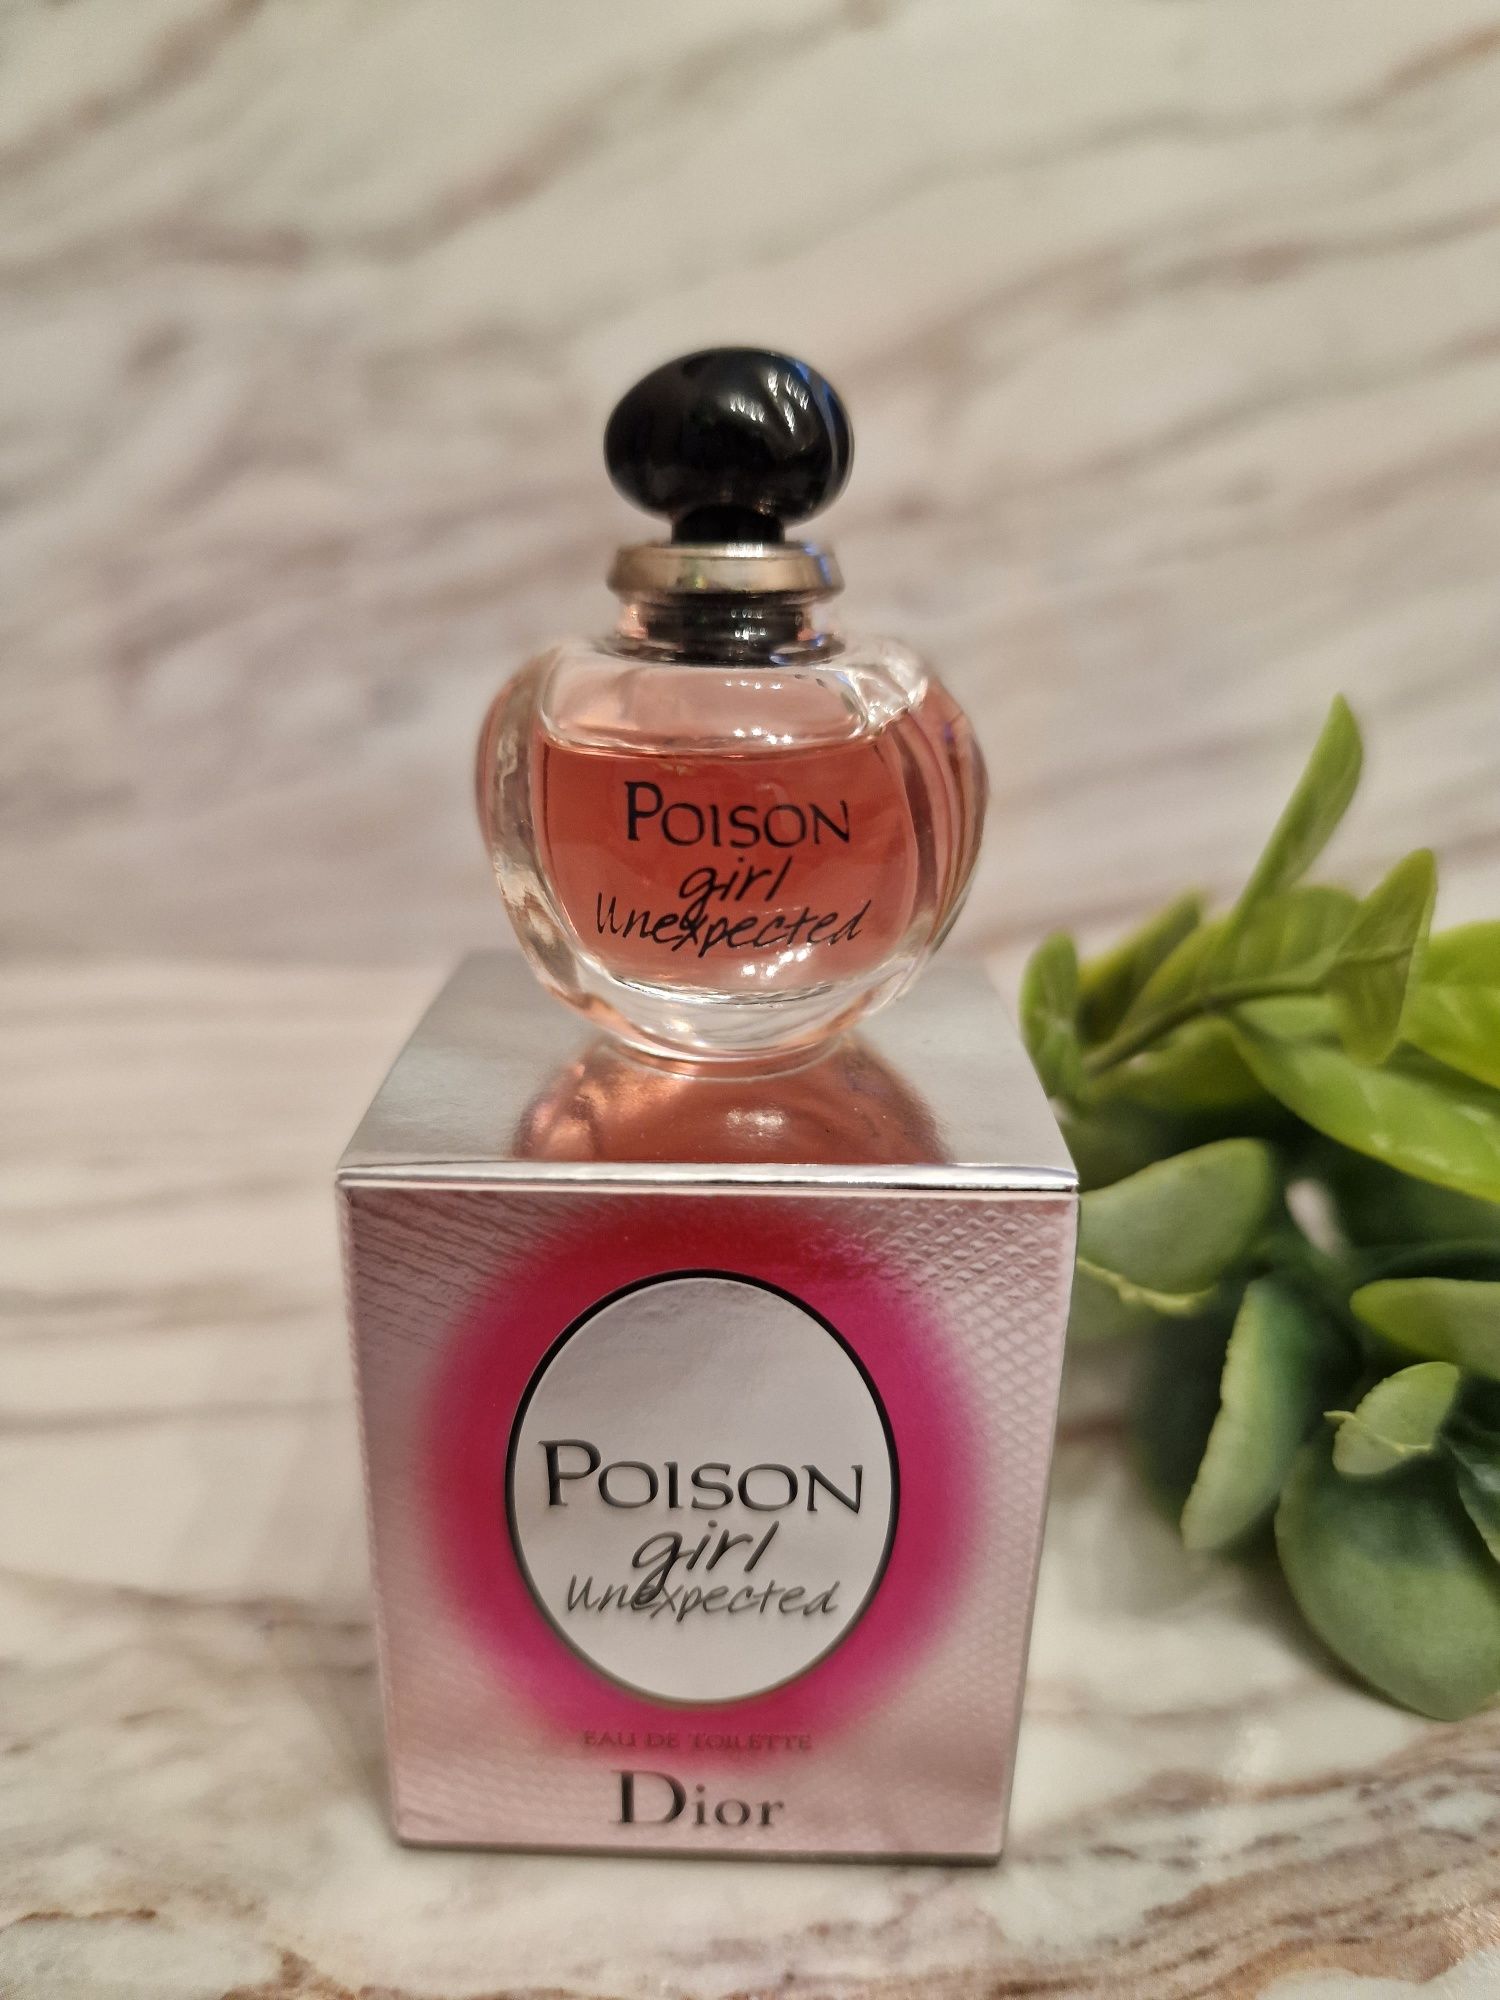 Dior poison girl unexpected 5 ml miniaturka